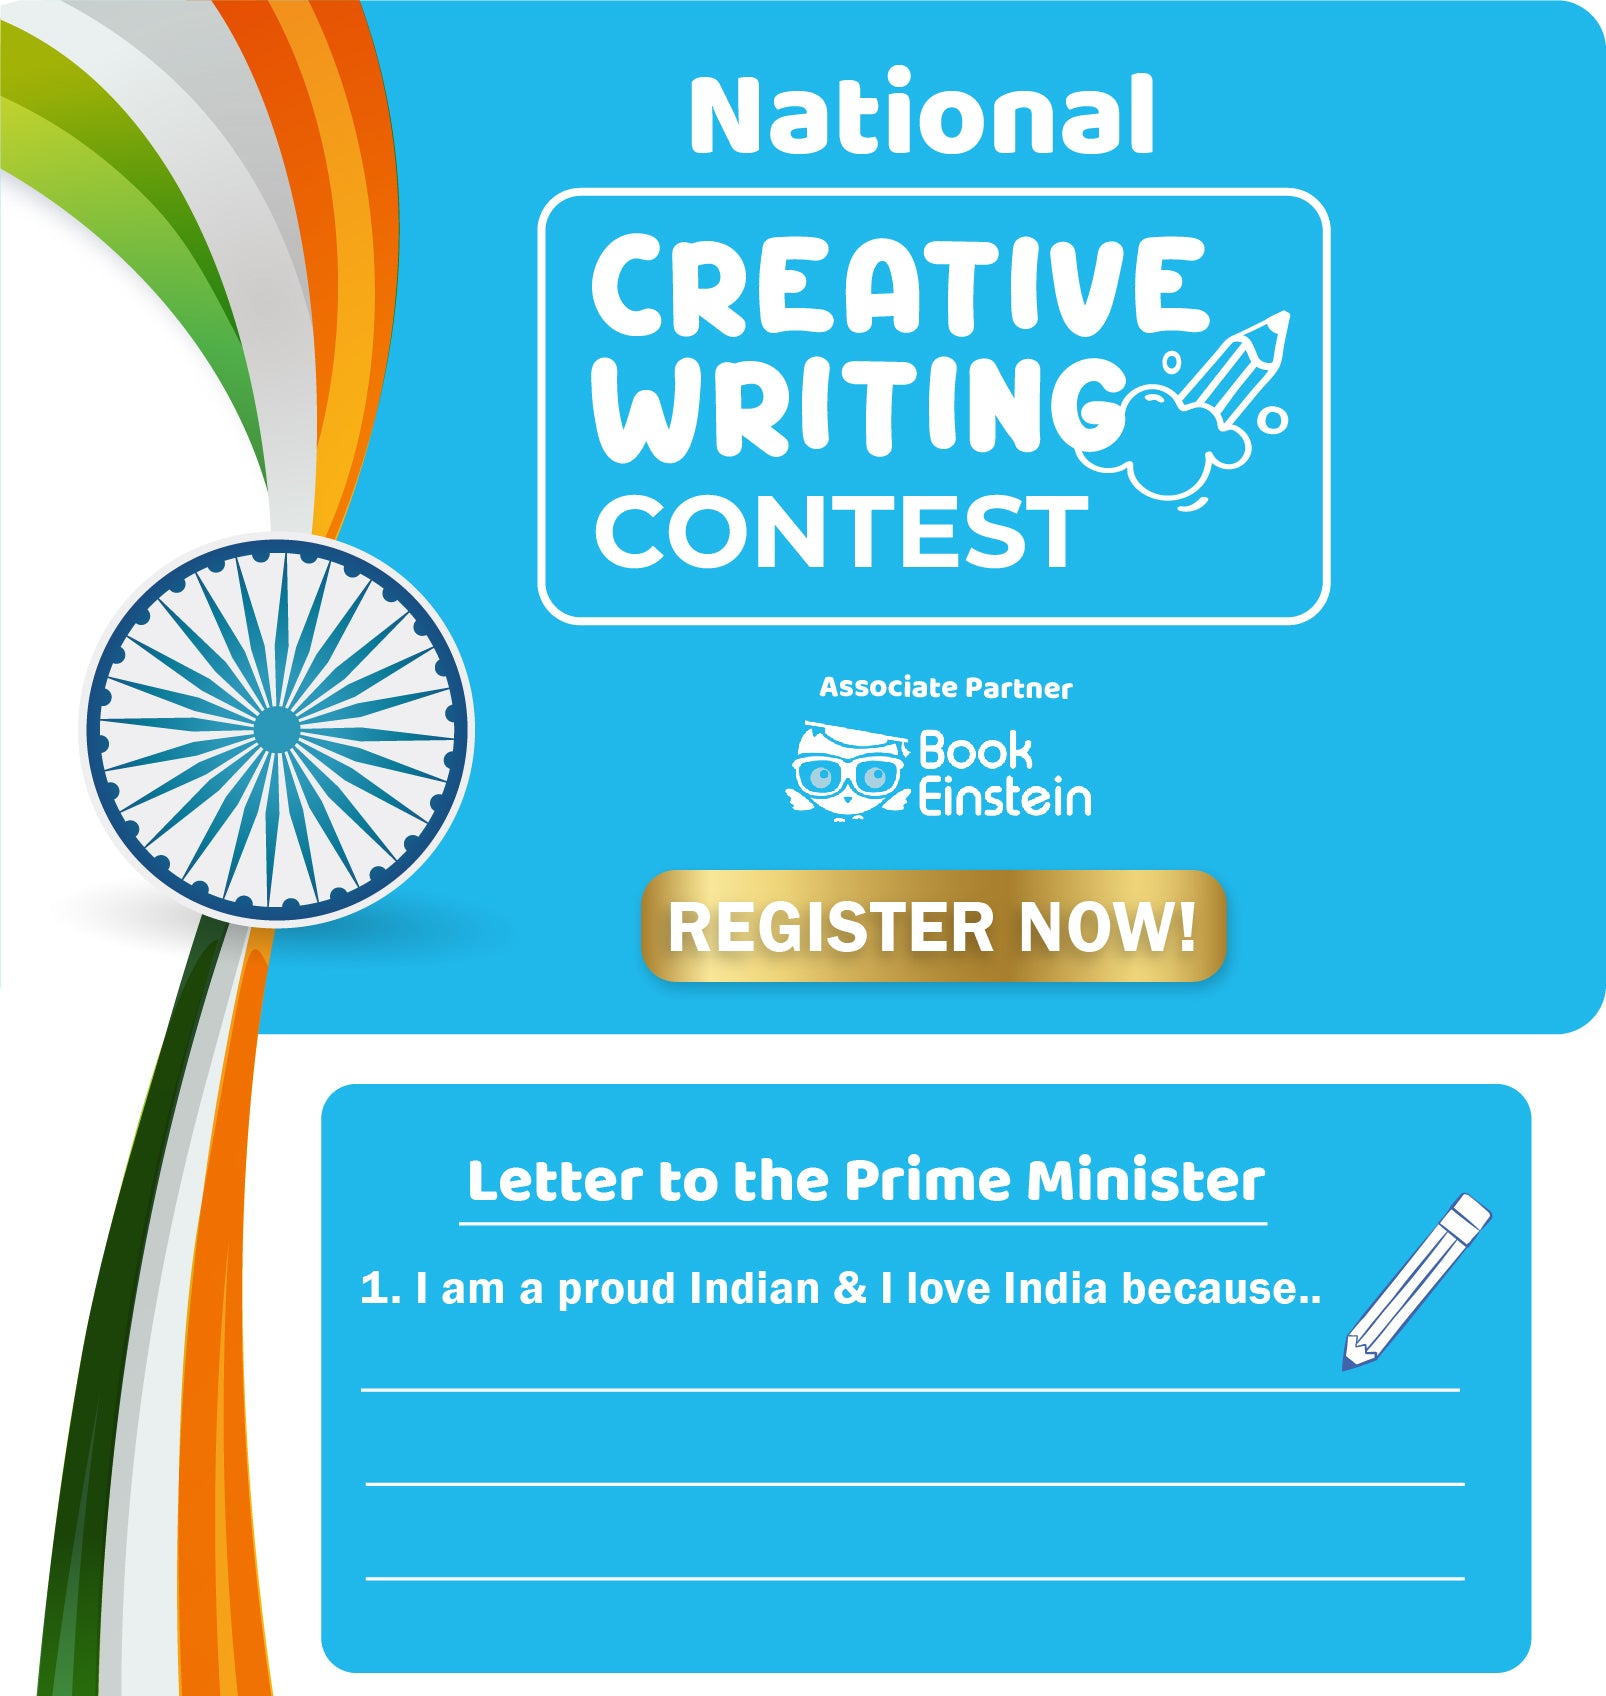 creative writing contest 2022